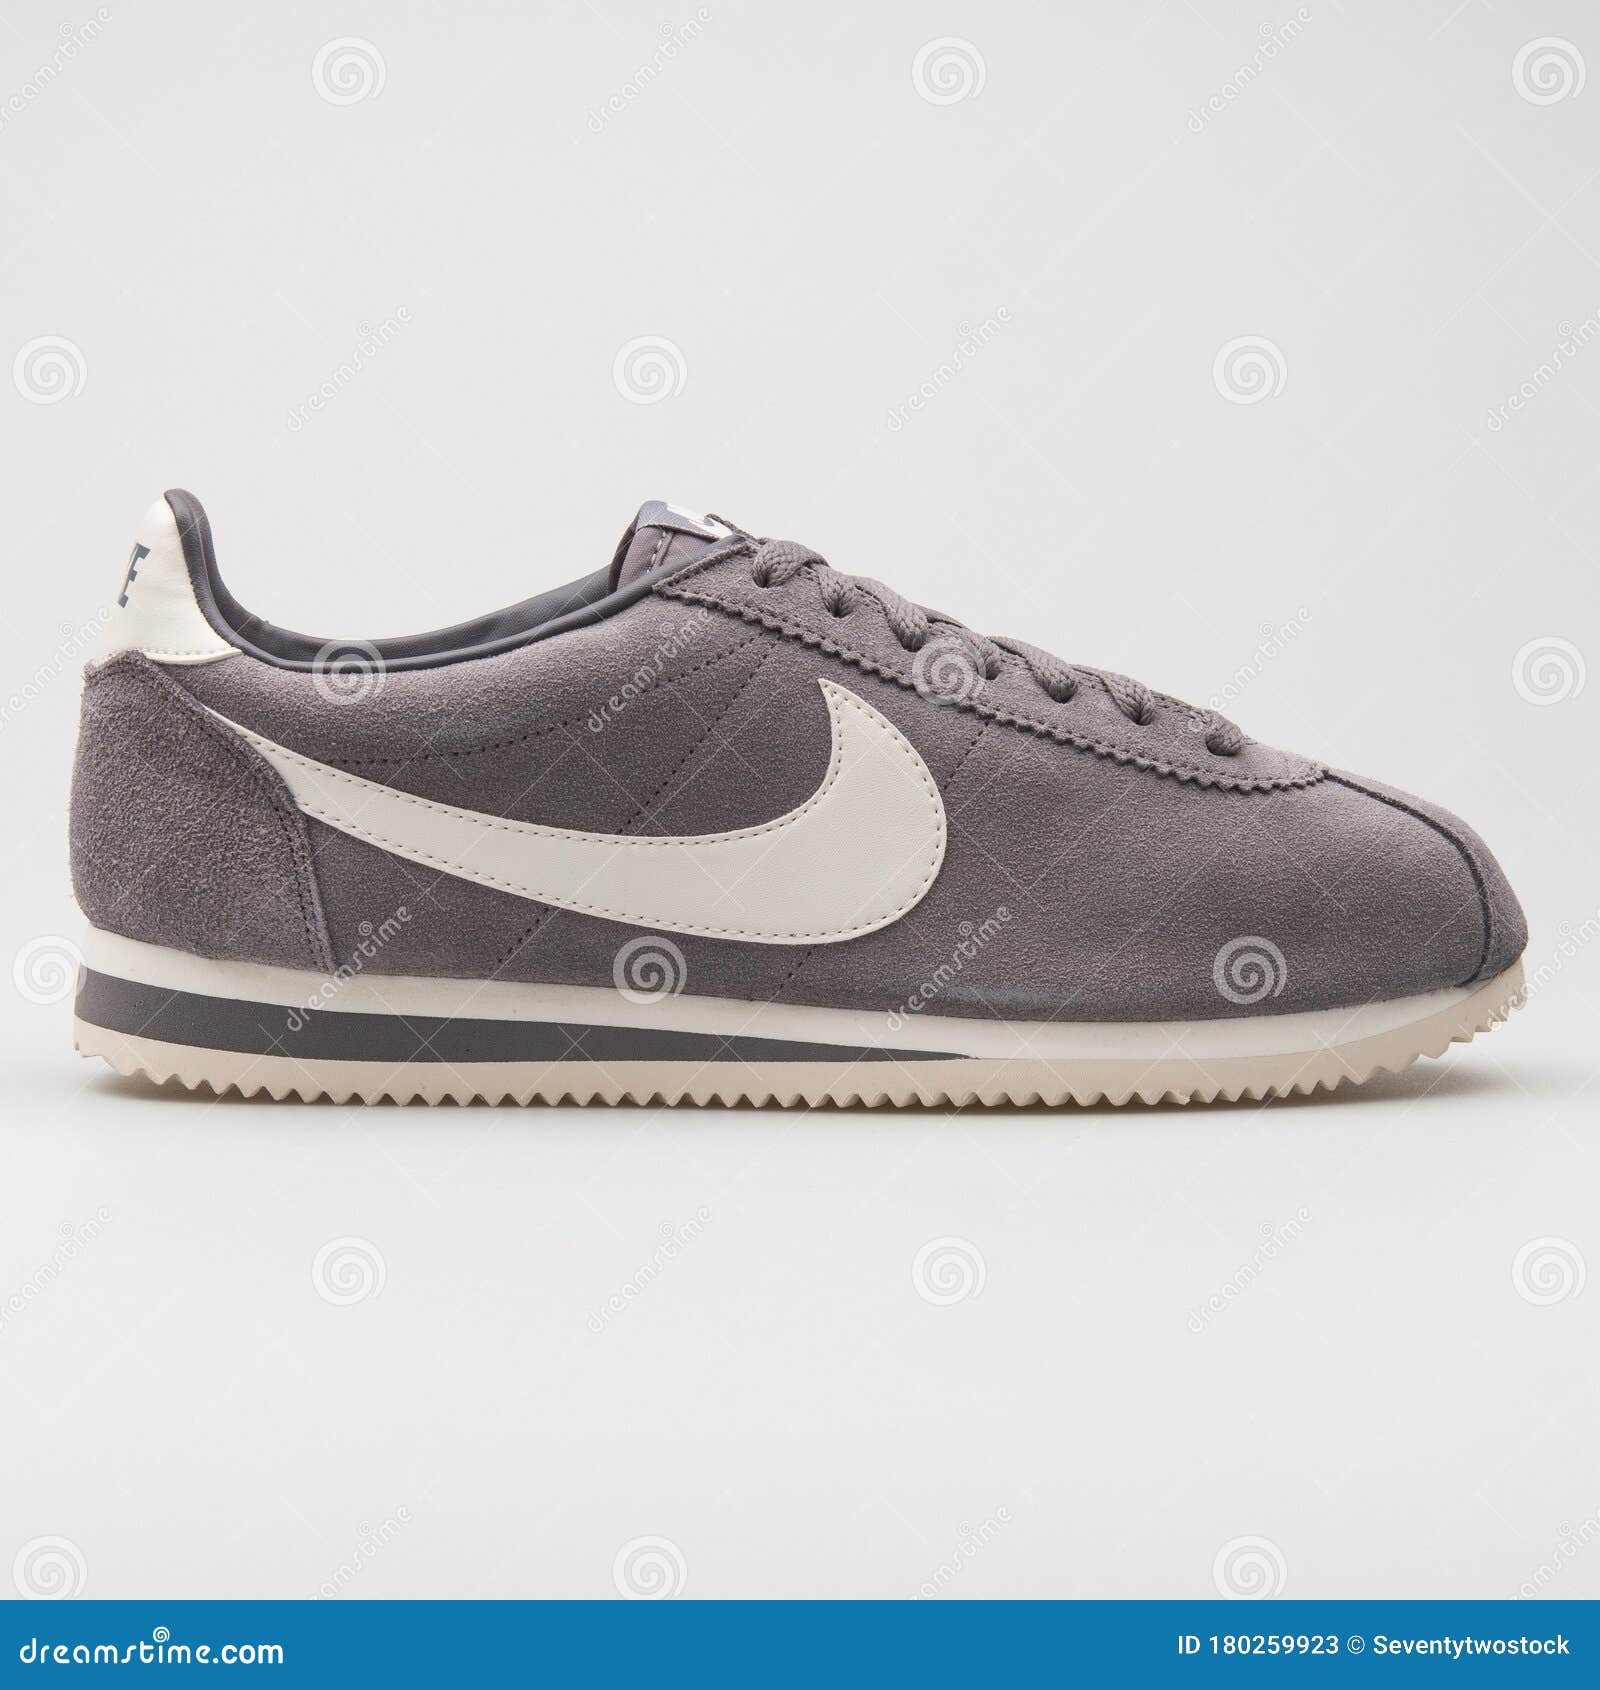 Nike Classic Suede Gun Smoke Grey White Sneaker Editorial Stock Photo - Image of background, back: 180259923